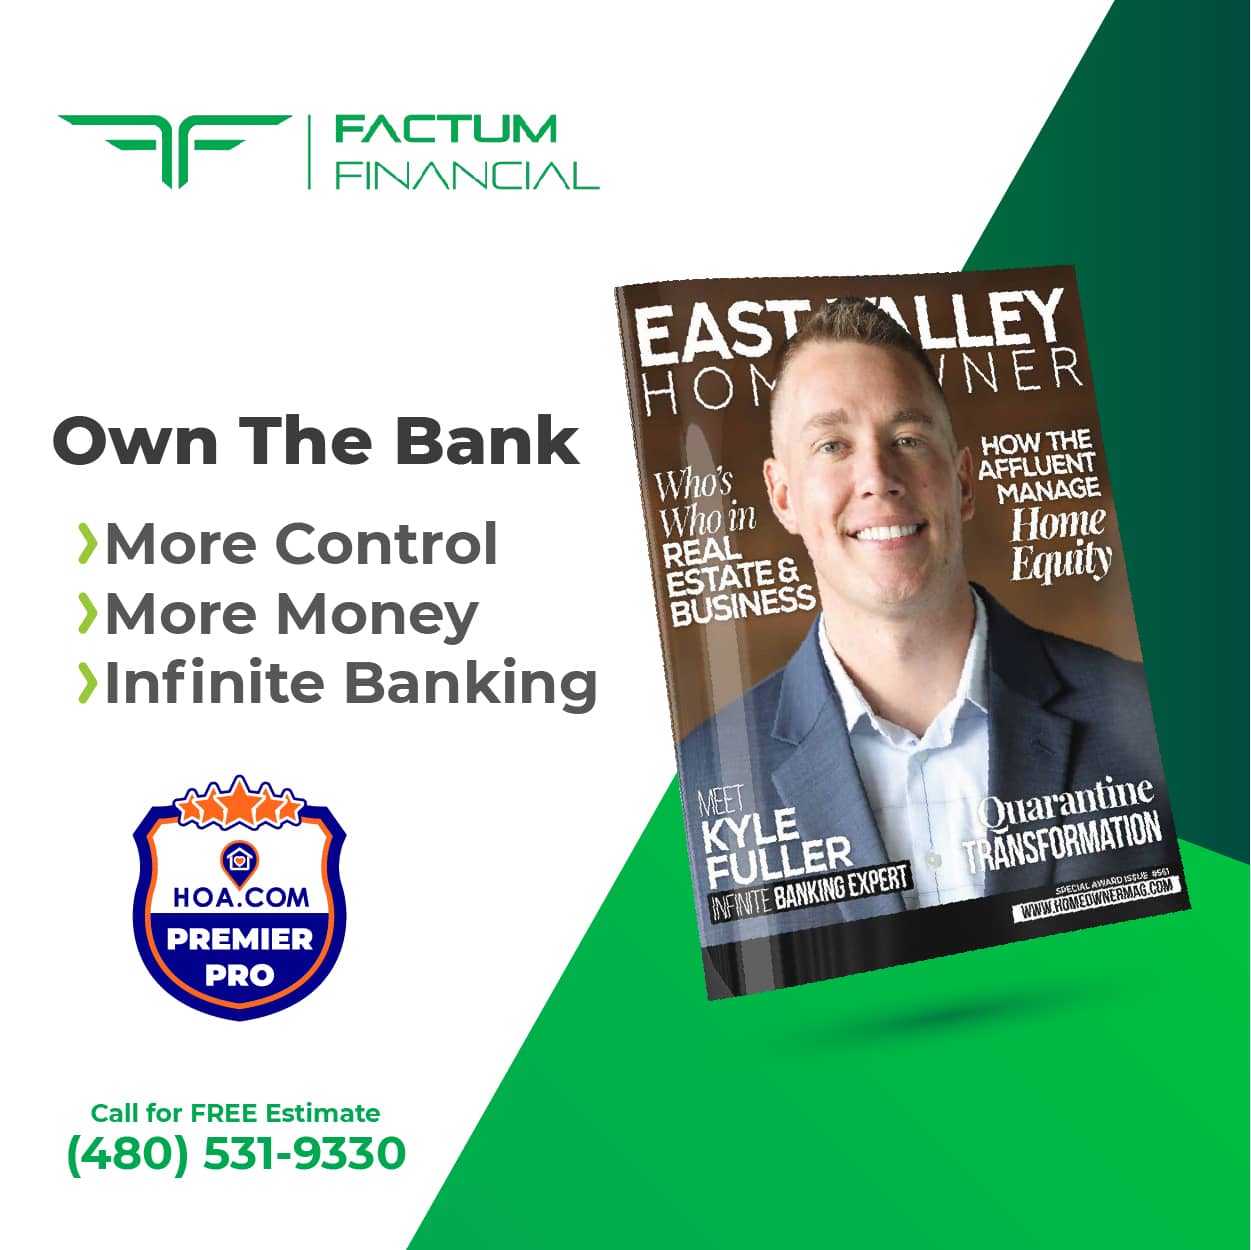 Factum Financial Own The Bank